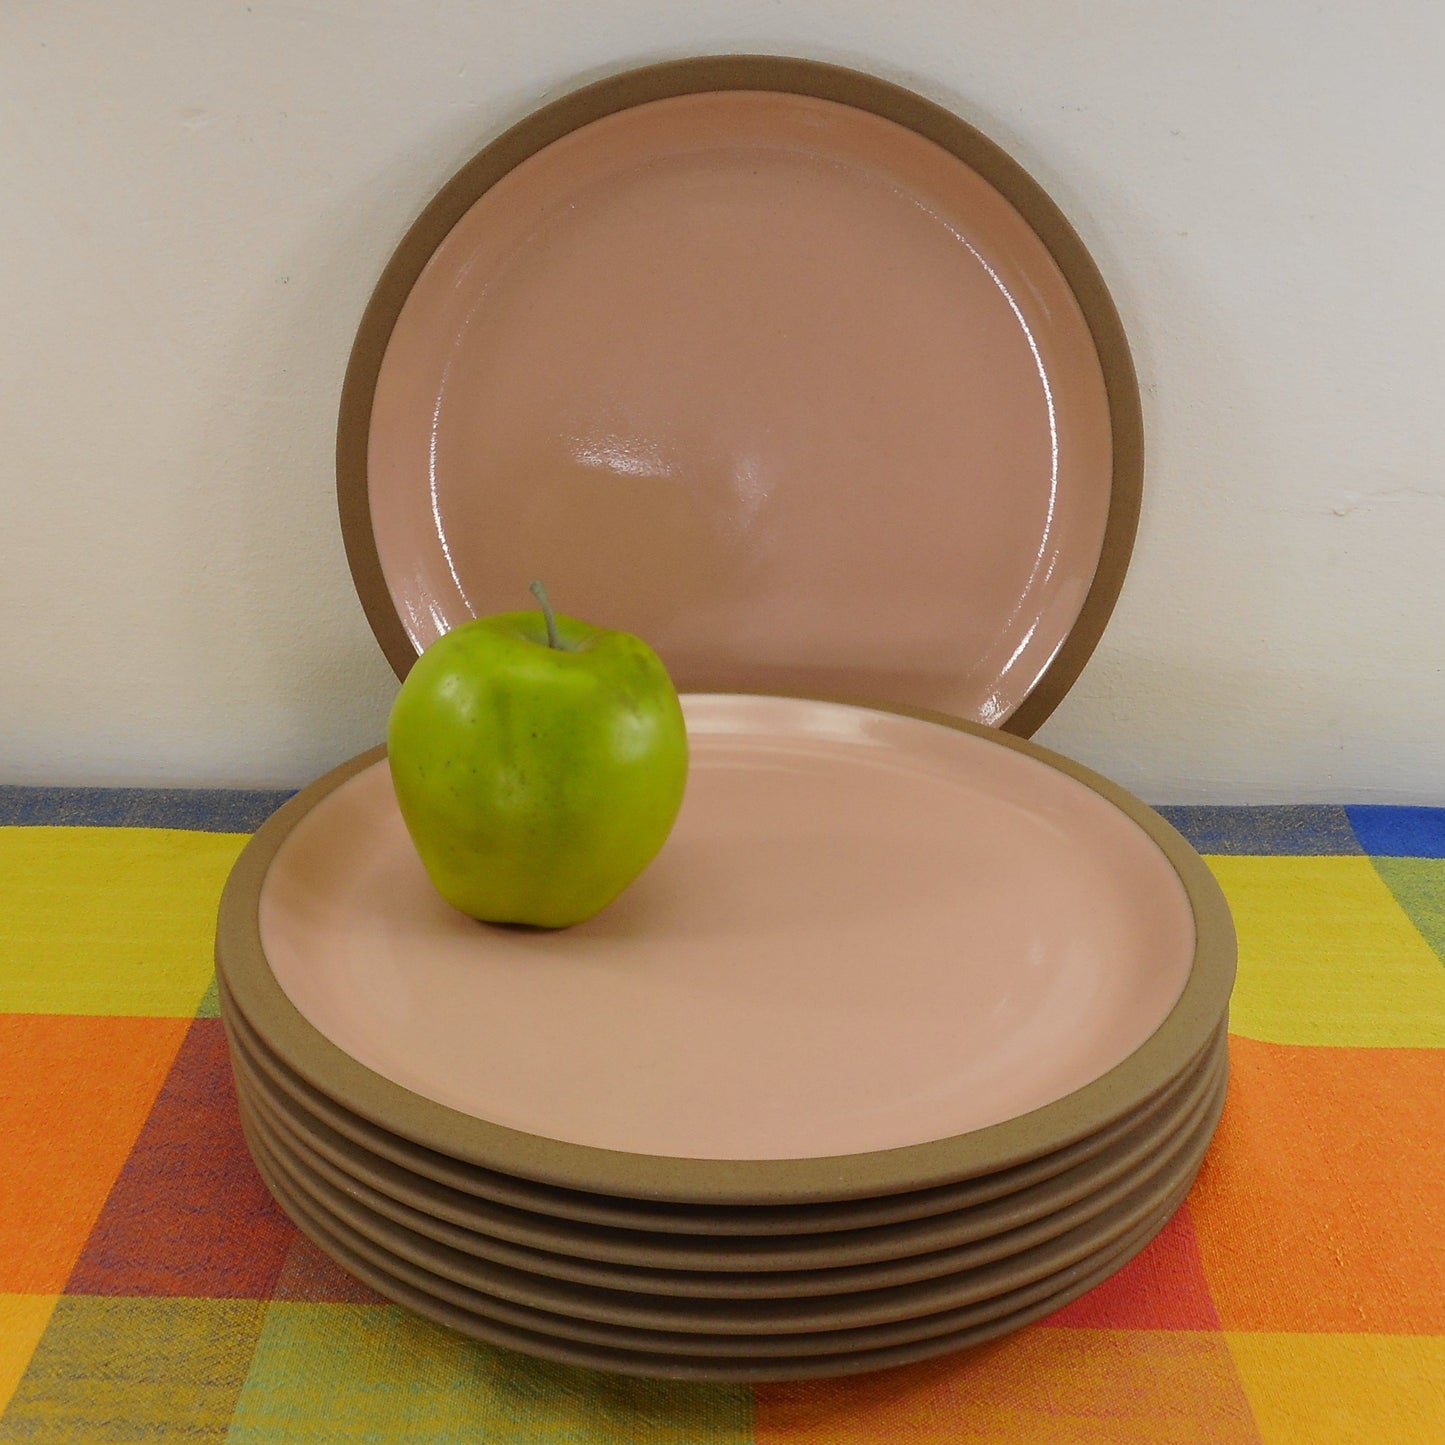 Midwinter Ltd. Japan CORAL SAND - 8 Set Dinner Plates 10-7/8" Pink Tan